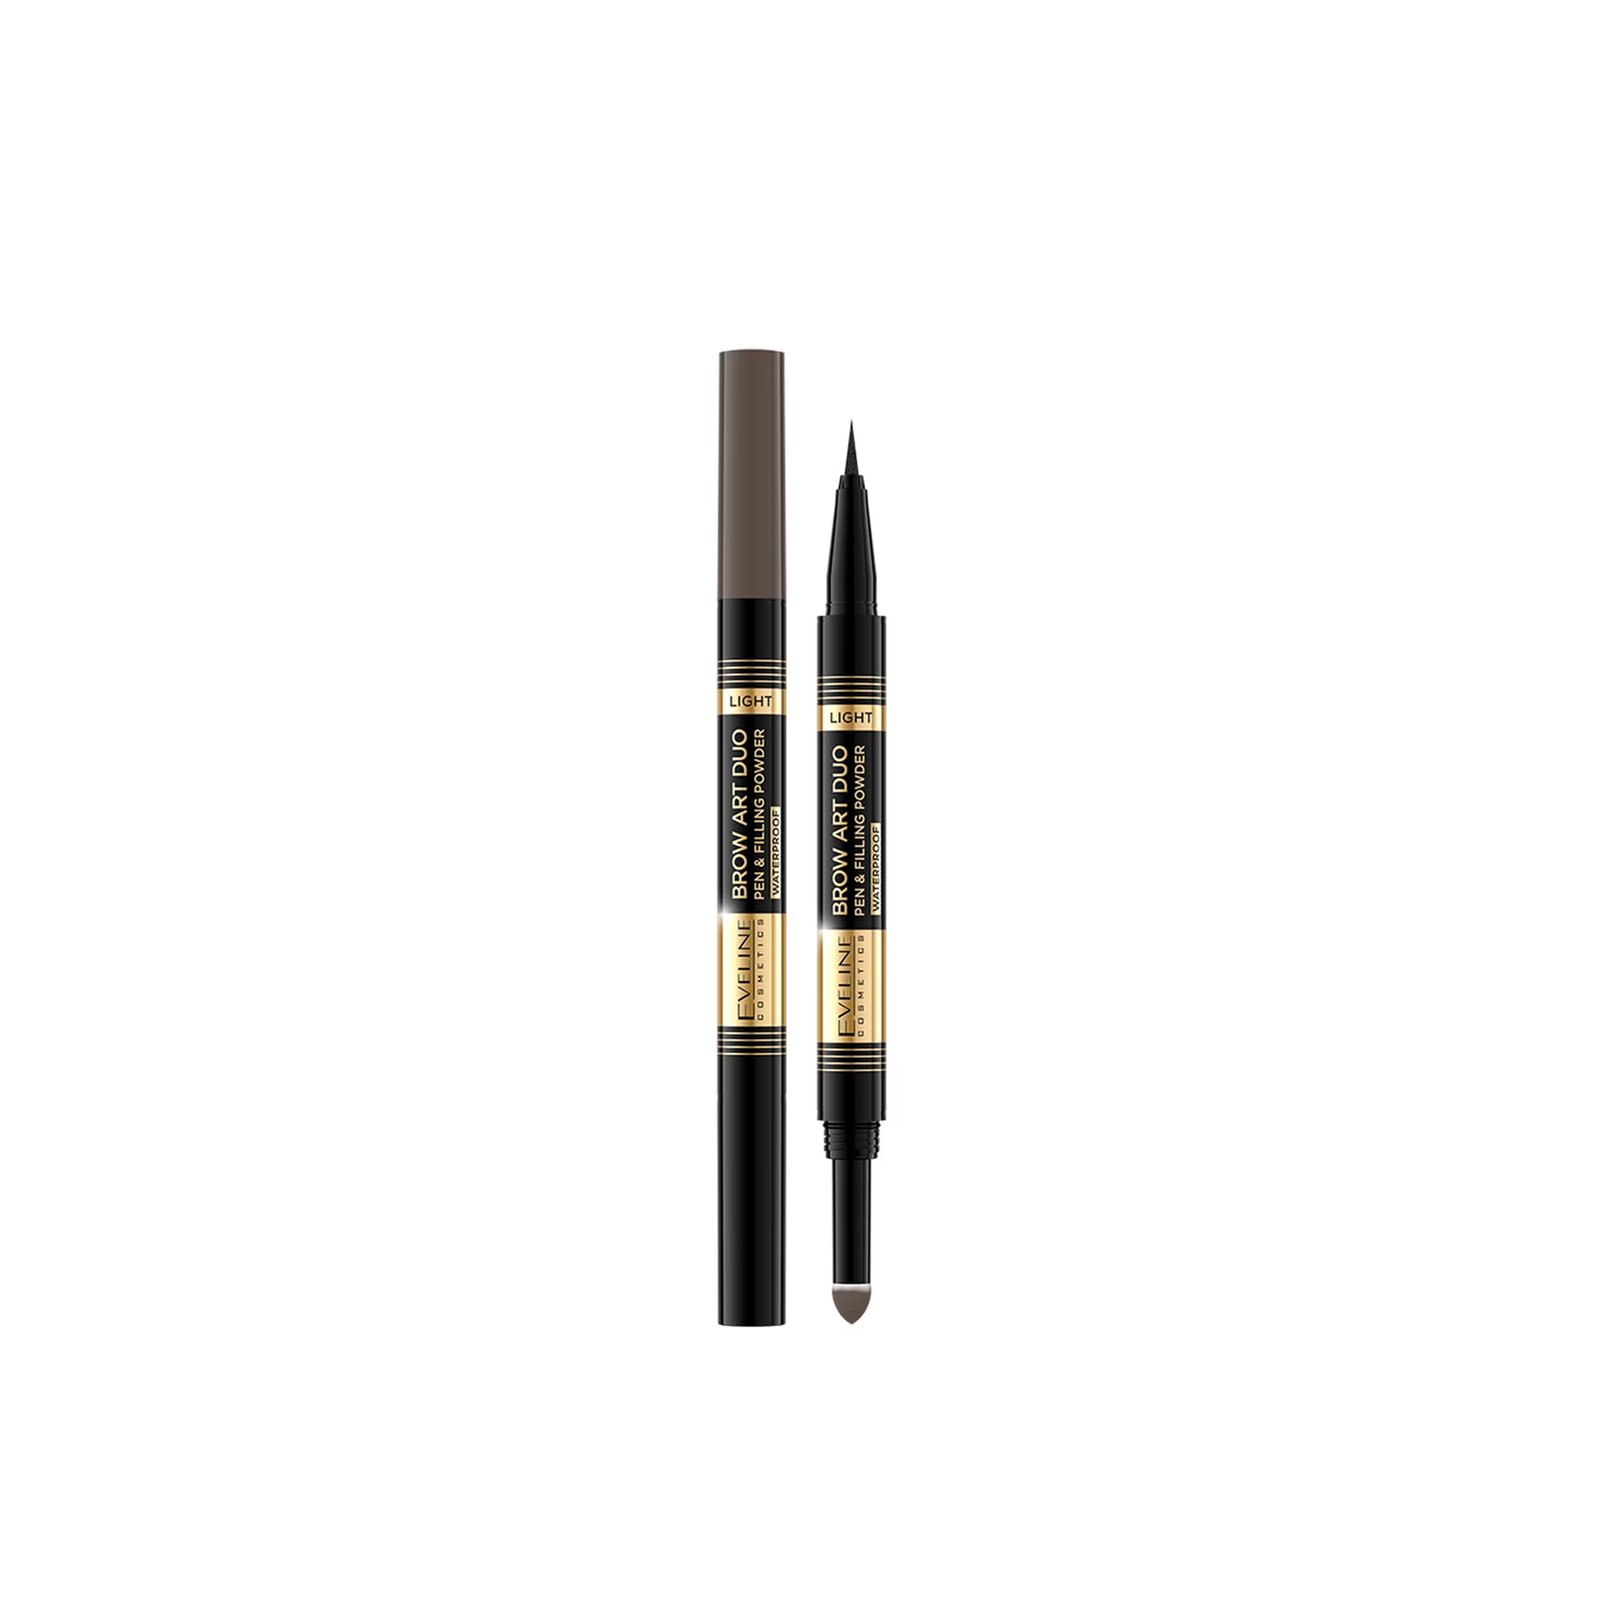 Eveline Cosmetics Brow Art Duo Waterproof Pen & Filling Powder 01 Light